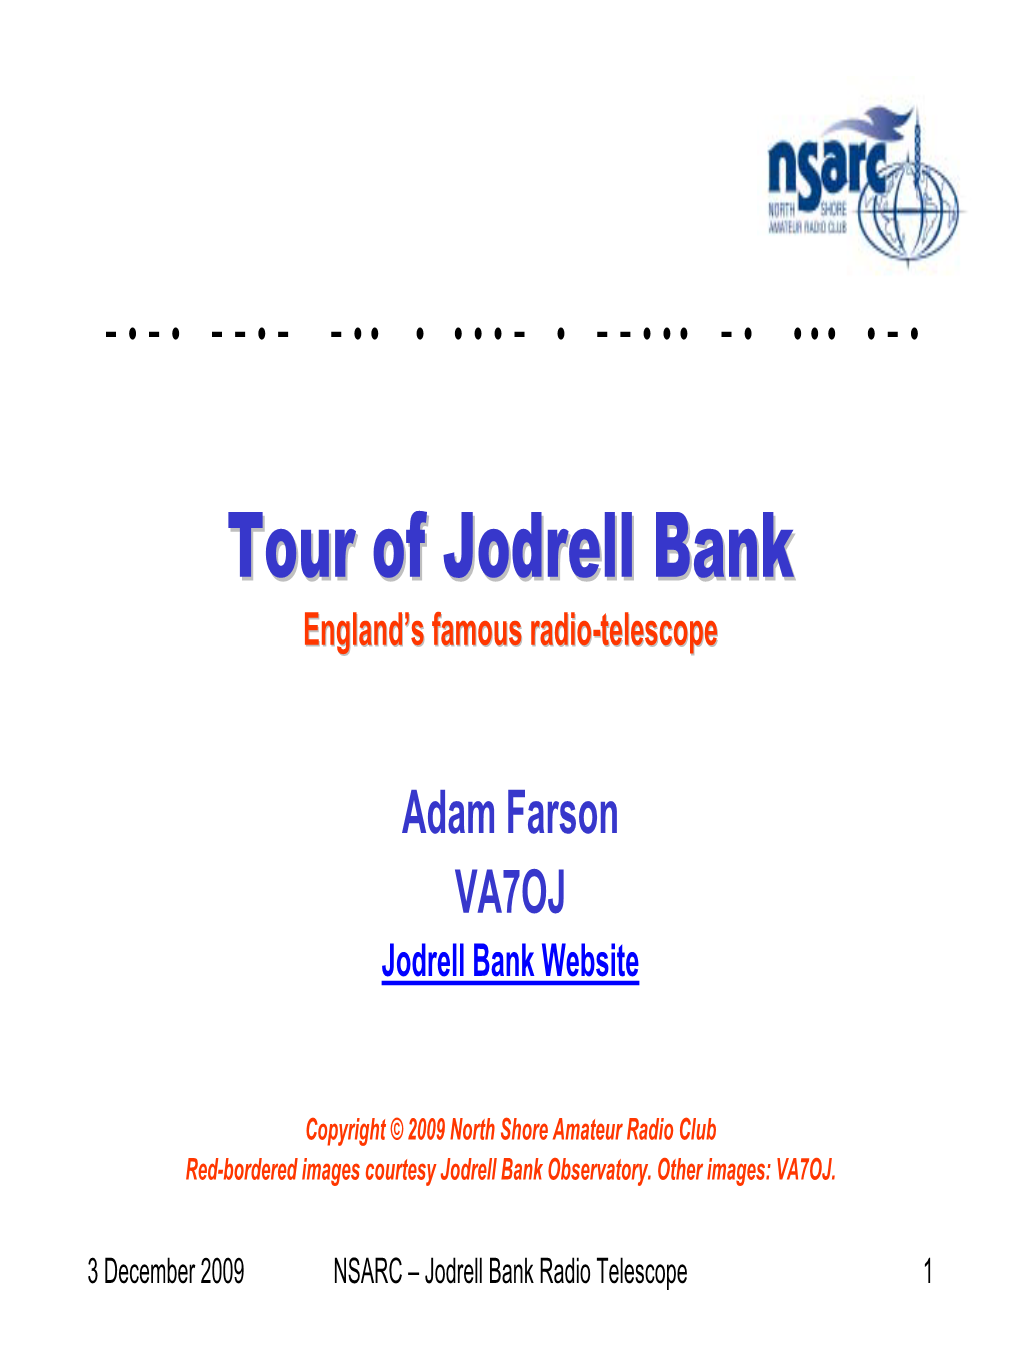 Tour of the Jodrell Bank Radio Telescope